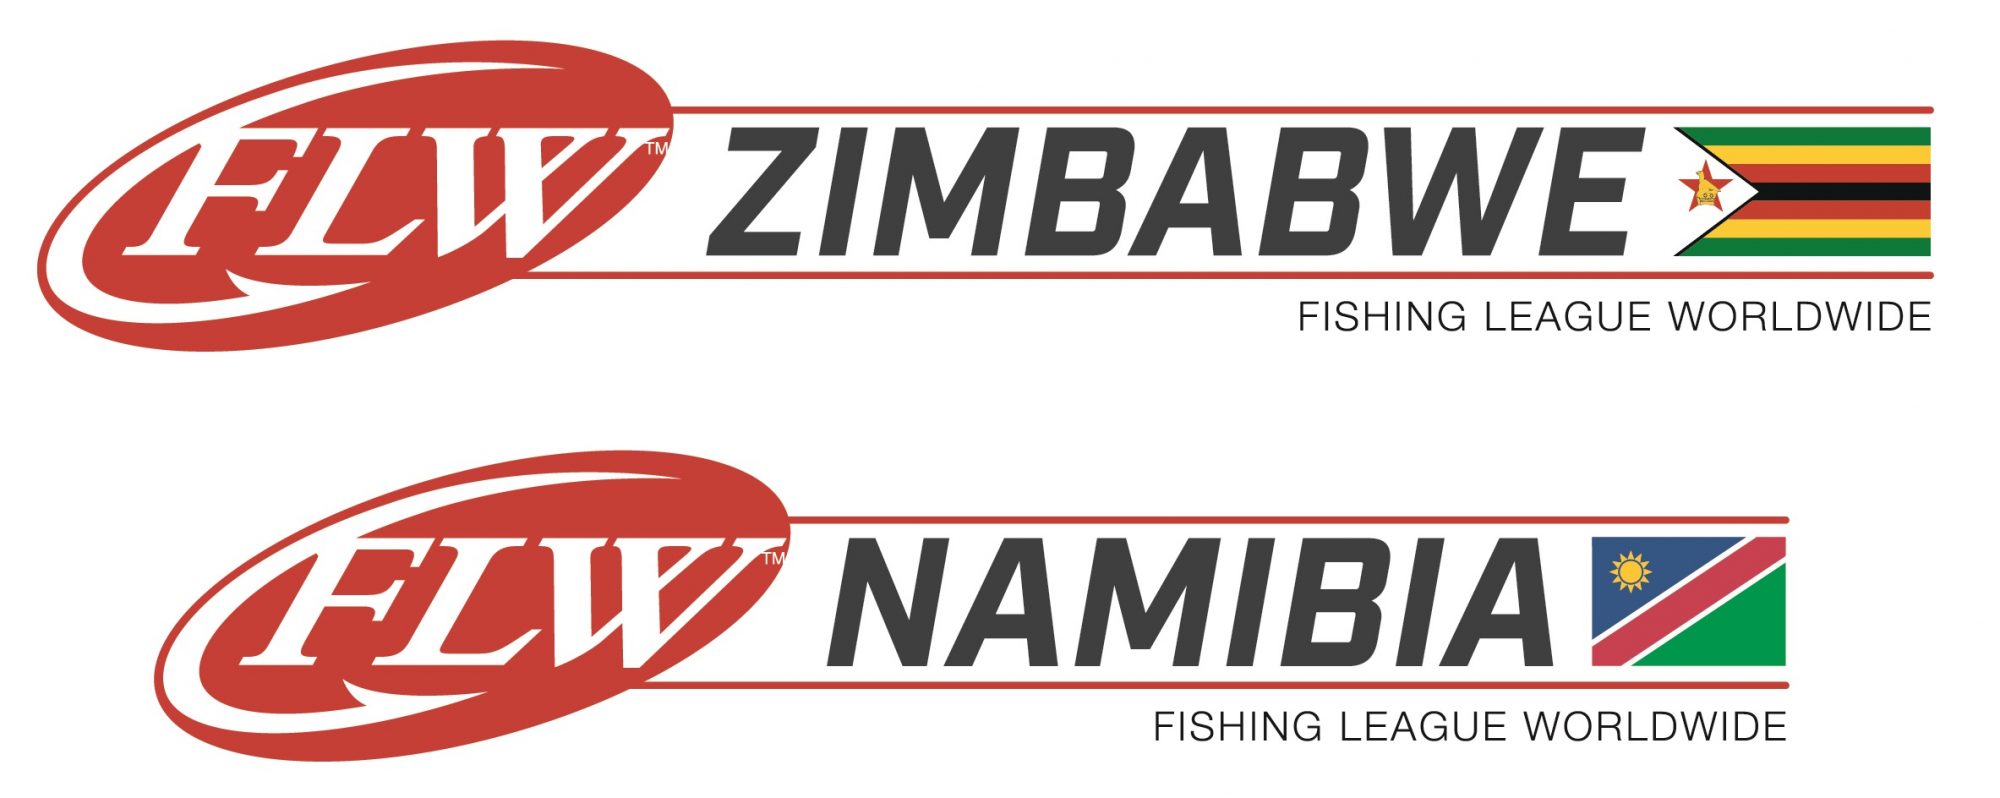 https://anglerschannel.com/wp-content/uploads/2019/04/FLW-ZimbabweAndNamibia-logo.jpg